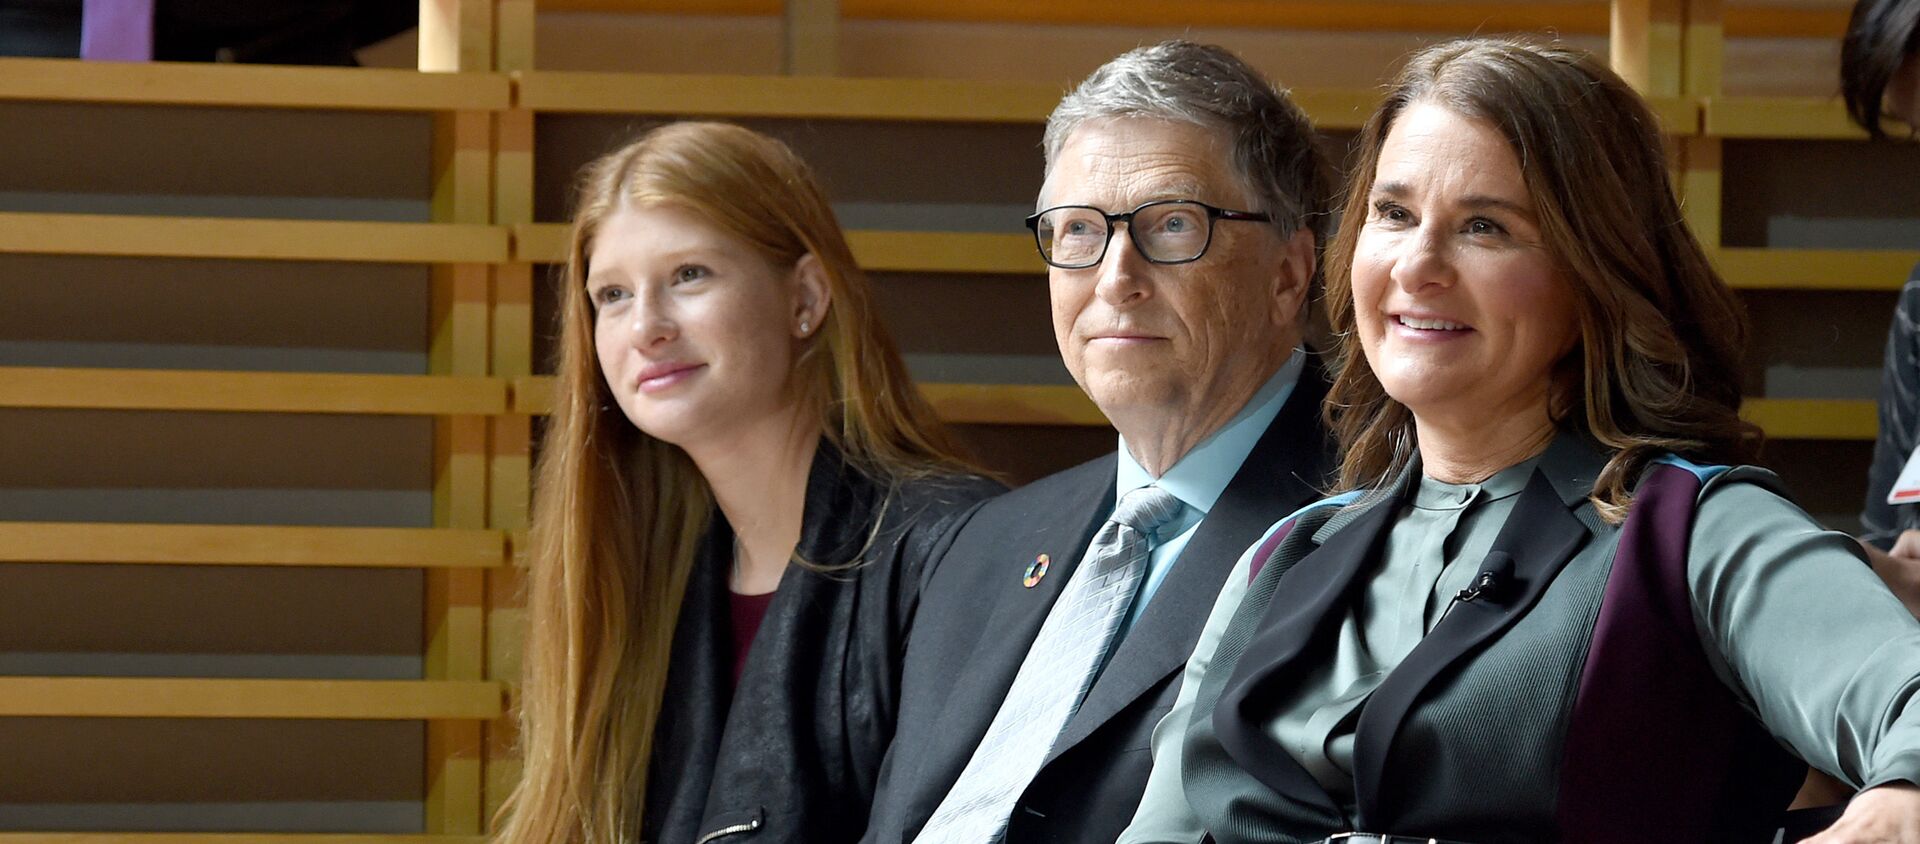 (L-R) Phoebe Adele Gates, Bill Gates, and Melinda Gates attend the Goalkeepers 2017, at Jazz at Lincoln Center on September 20, 2017 in New York City - Sputnik International, 1920, 18.05.2021